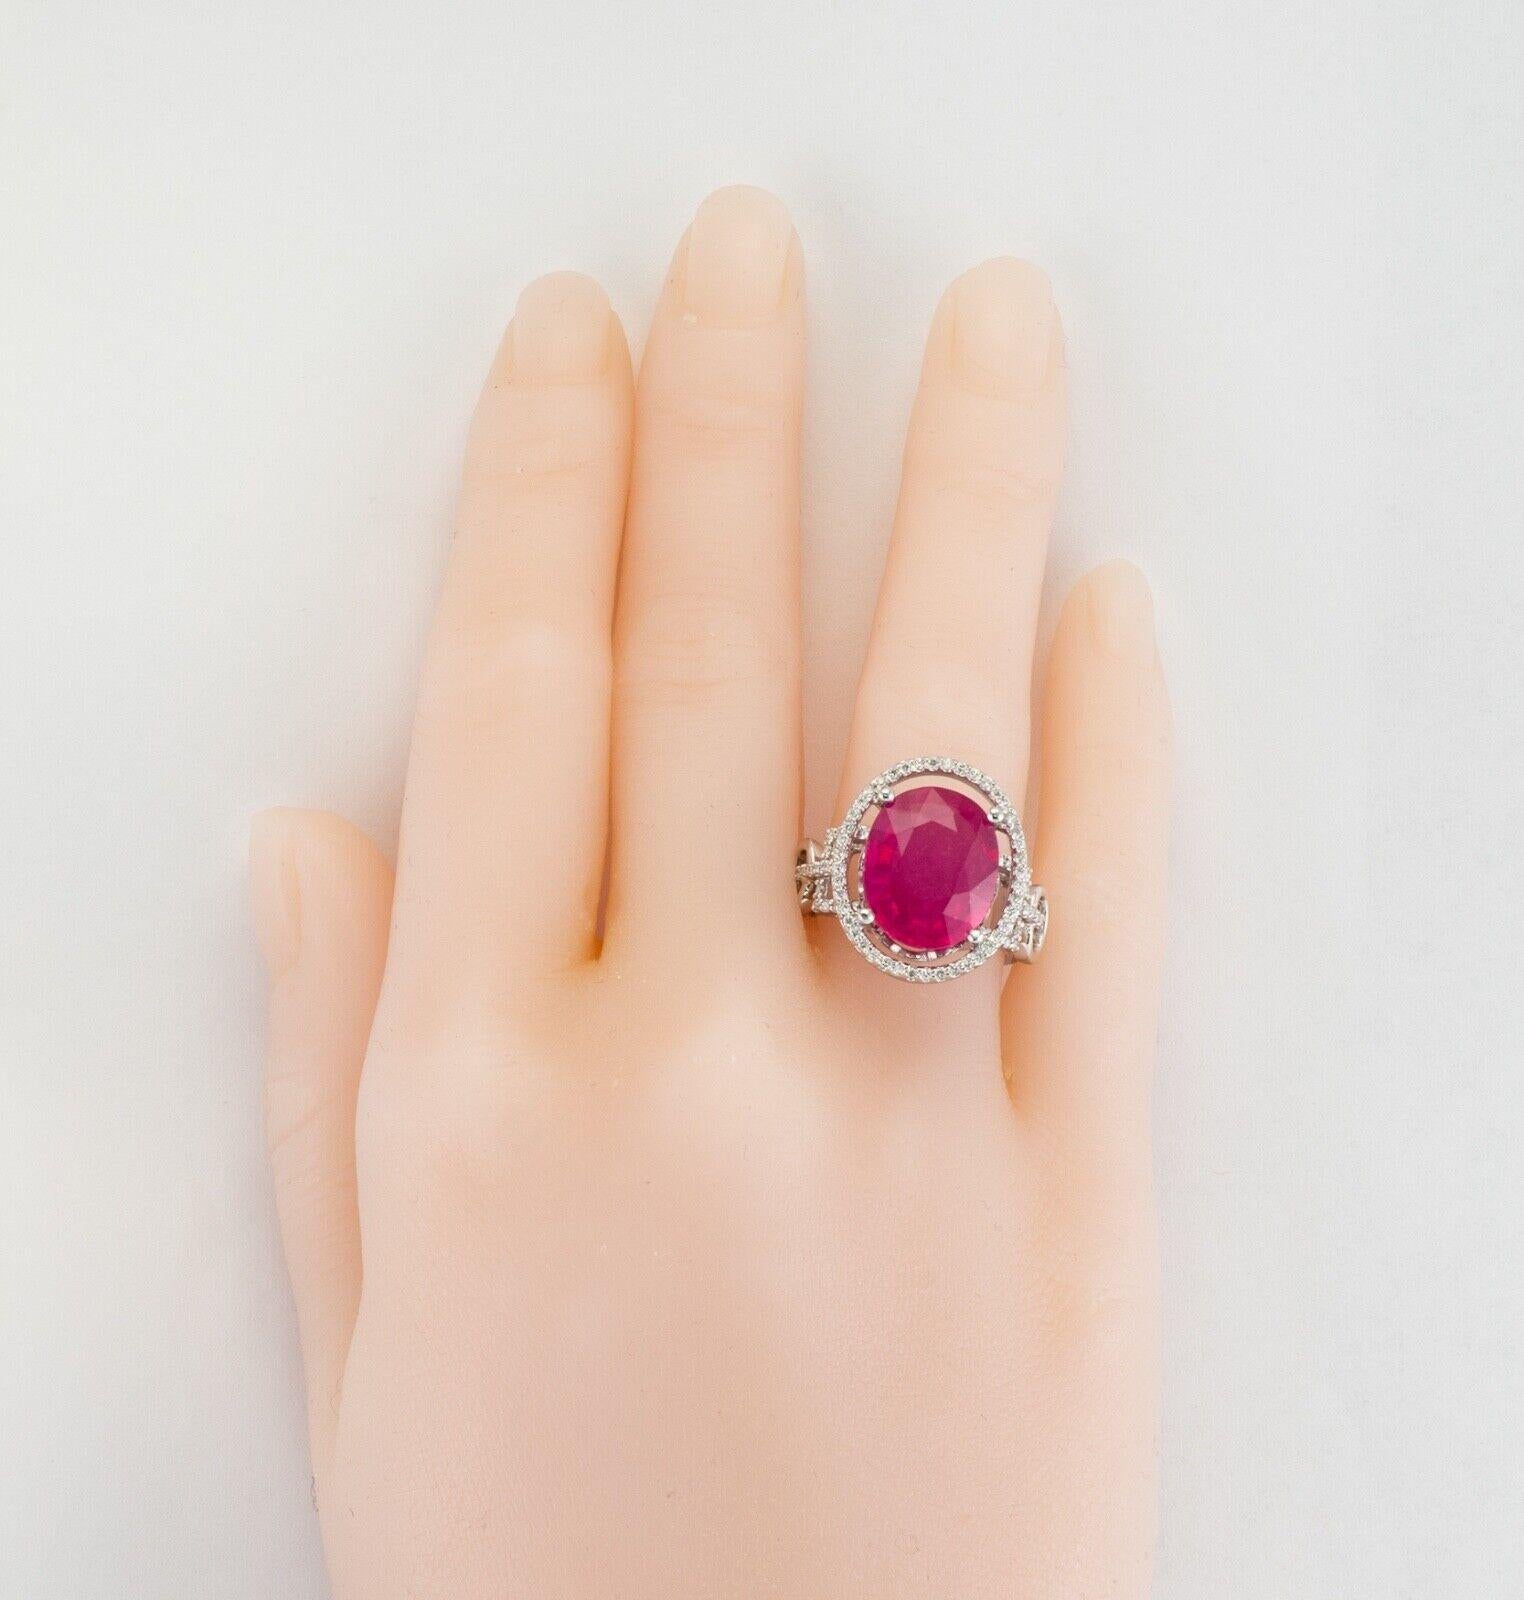 Women's Pink Ruby Diamond Ring 14K White Gold For Sale